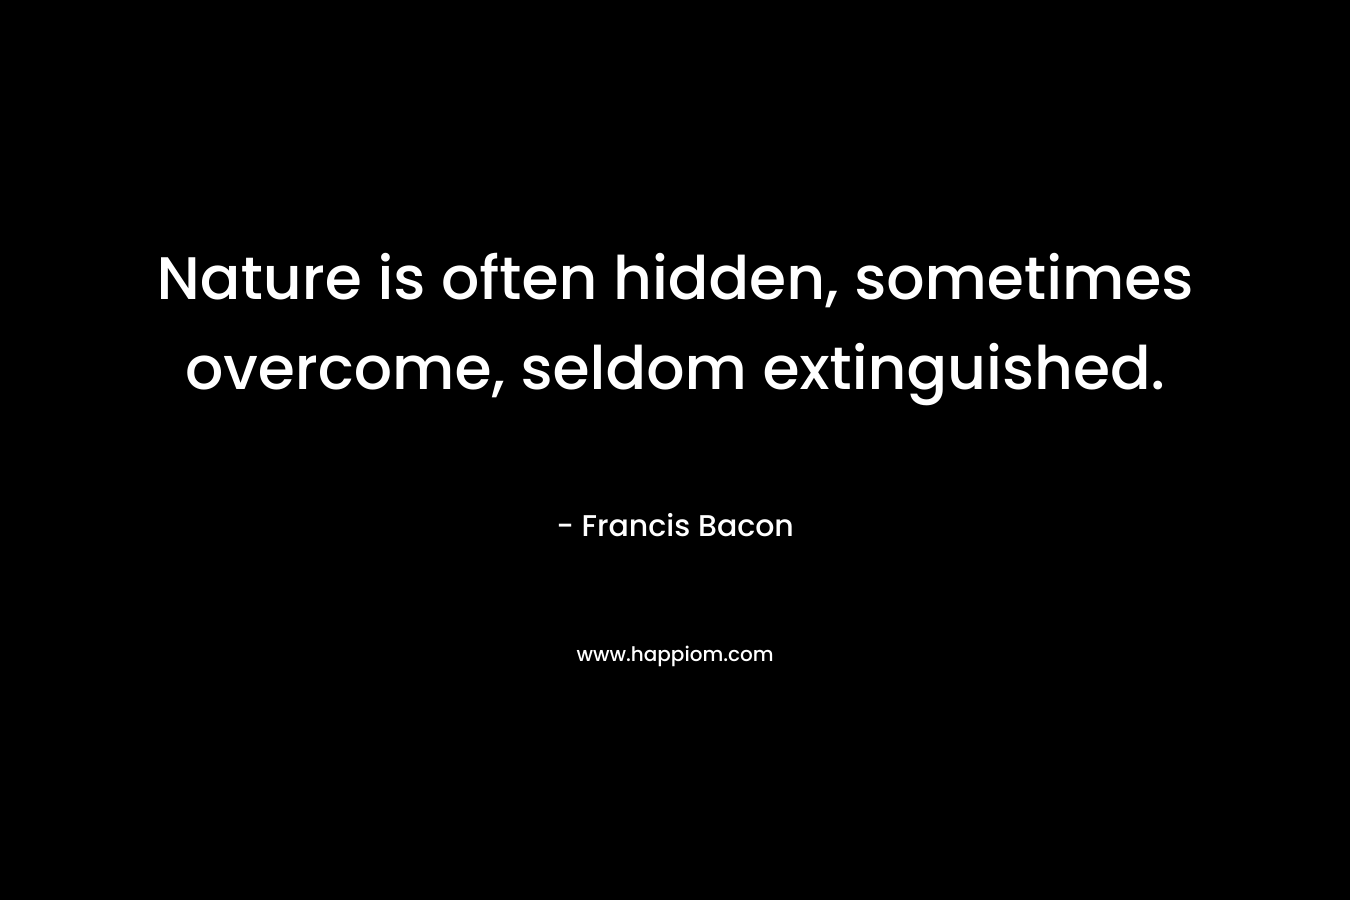 Nature is often hidden, sometimes overcome, seldom extinguished.